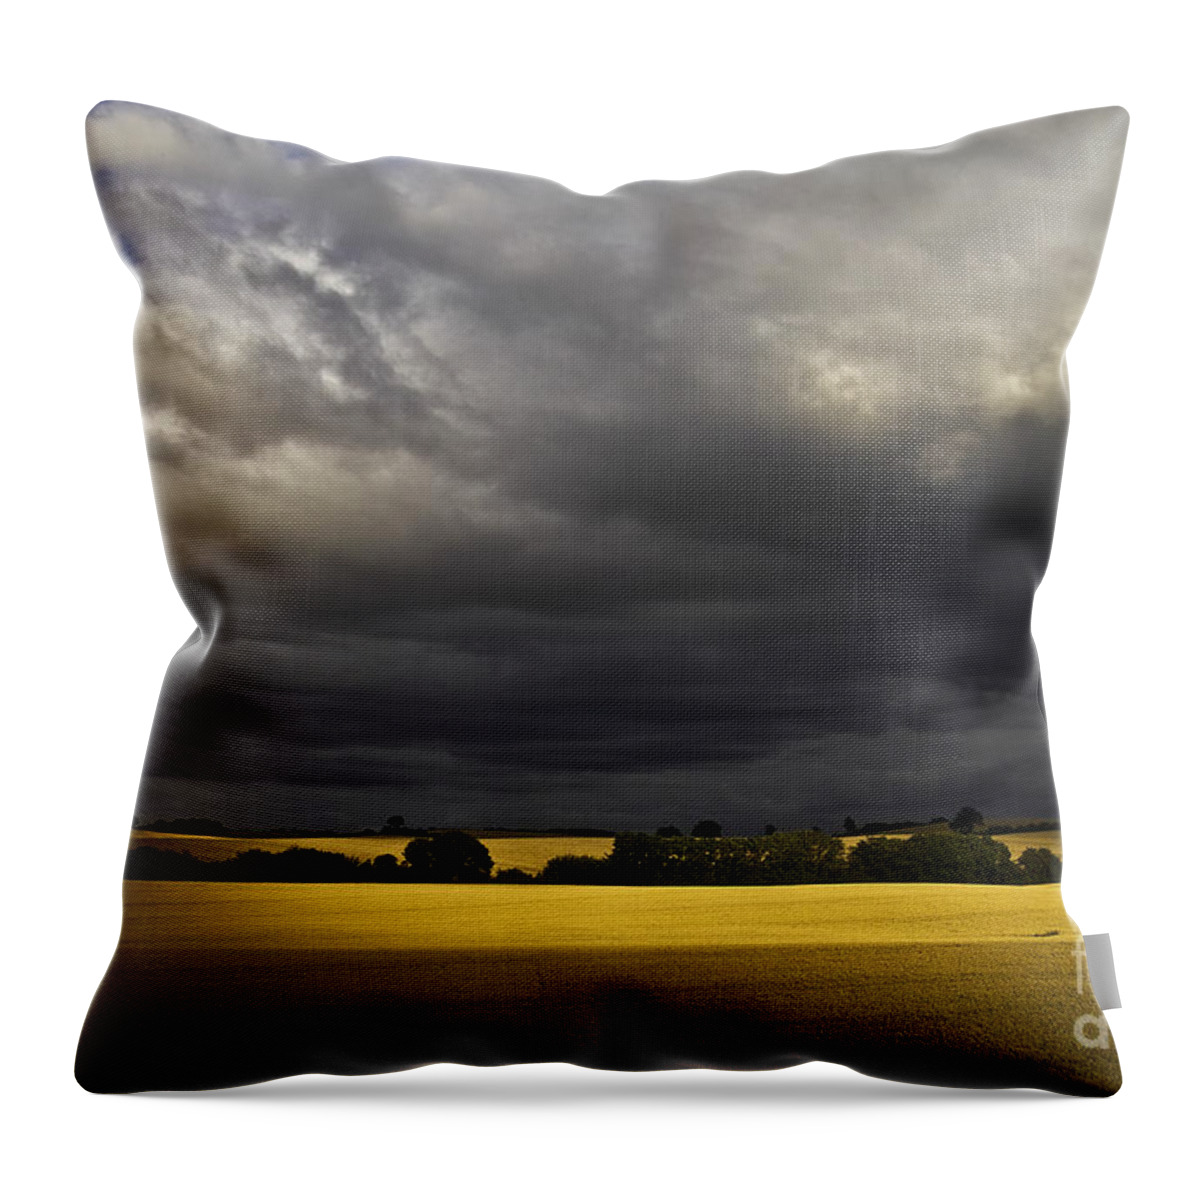 Rapefield Throw Pillow featuring the photograph Rapefield Under Dark Sky by Heiko Koehrer-Wagner